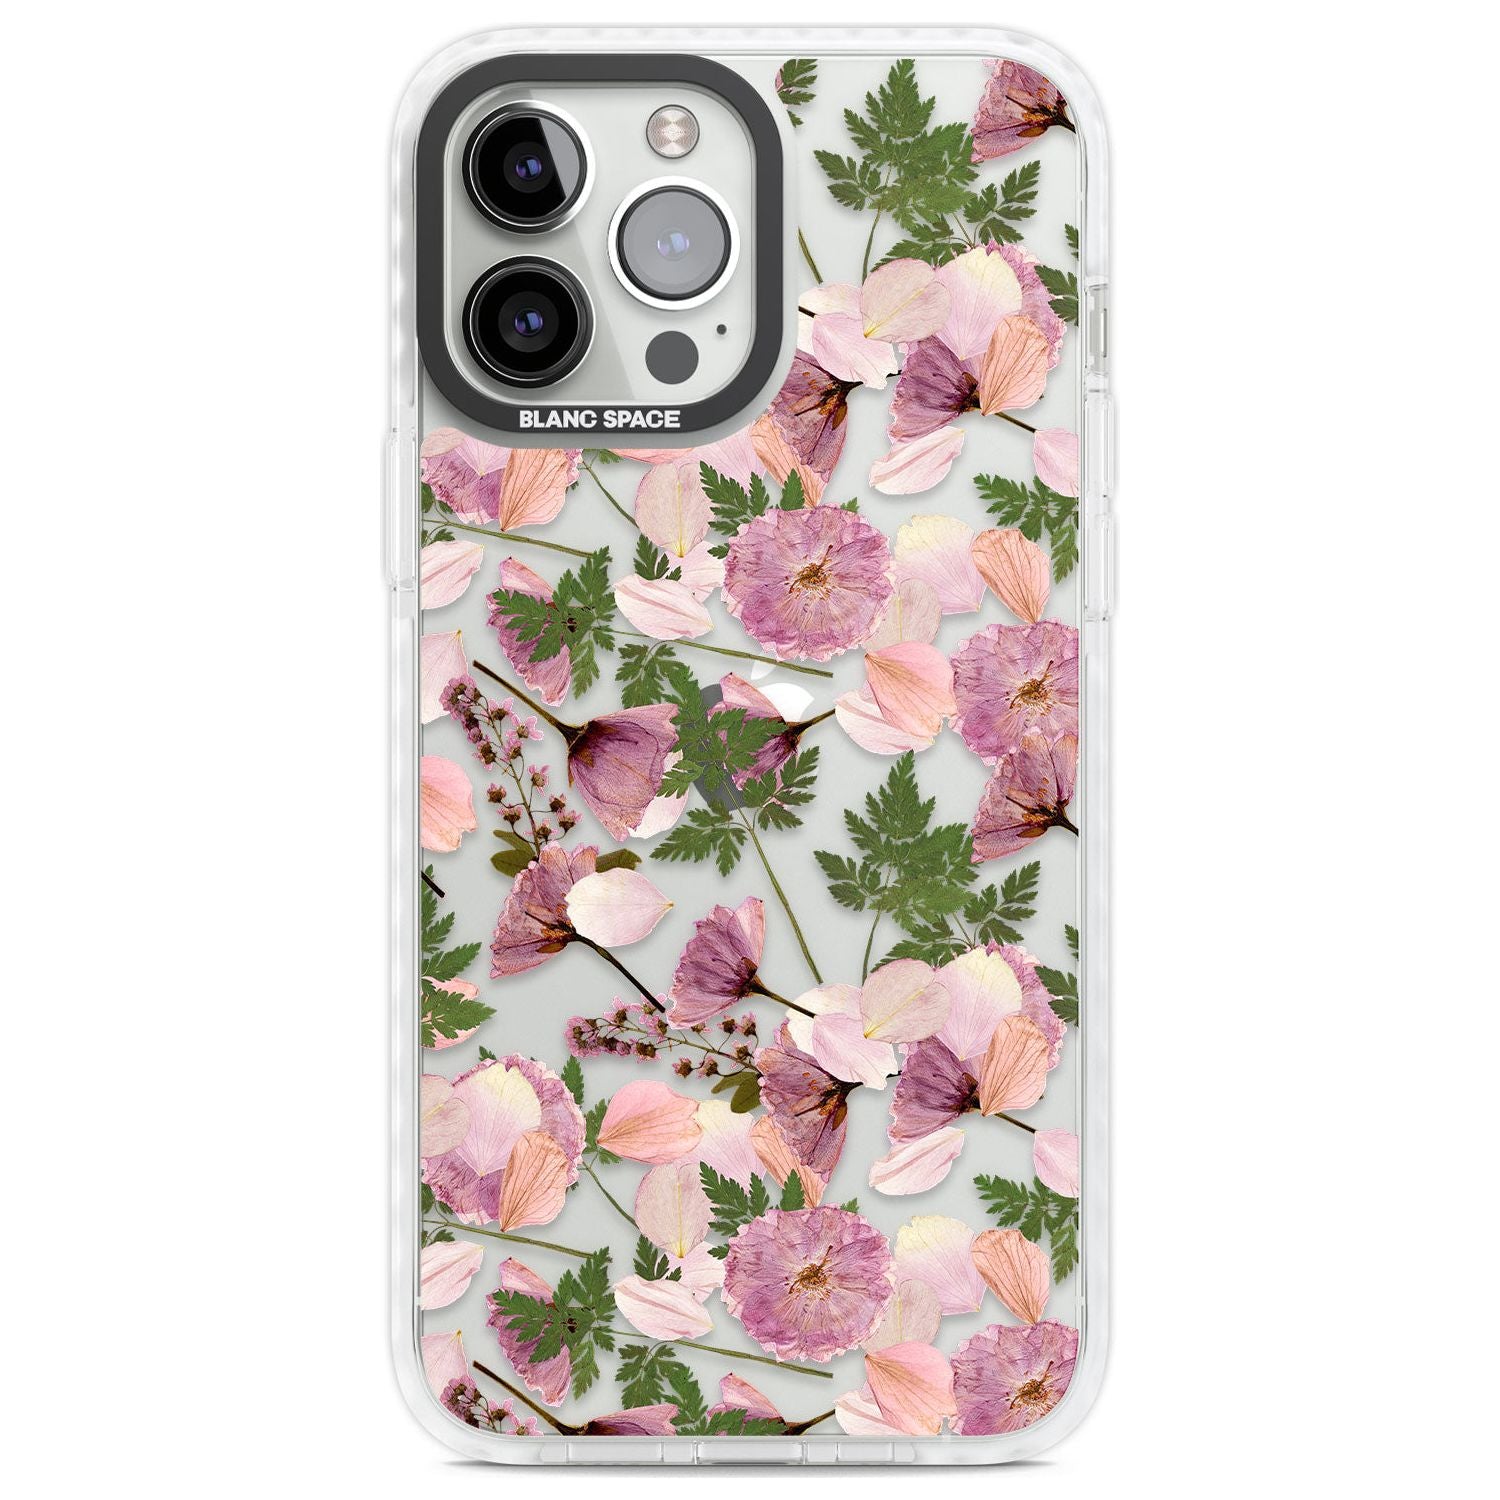 Leafy Floral Pattern Transparent Design Phone Case iPhone 13 Pro Max / Impact Case,iPhone 14 Pro Max / Impact Case Blanc Space